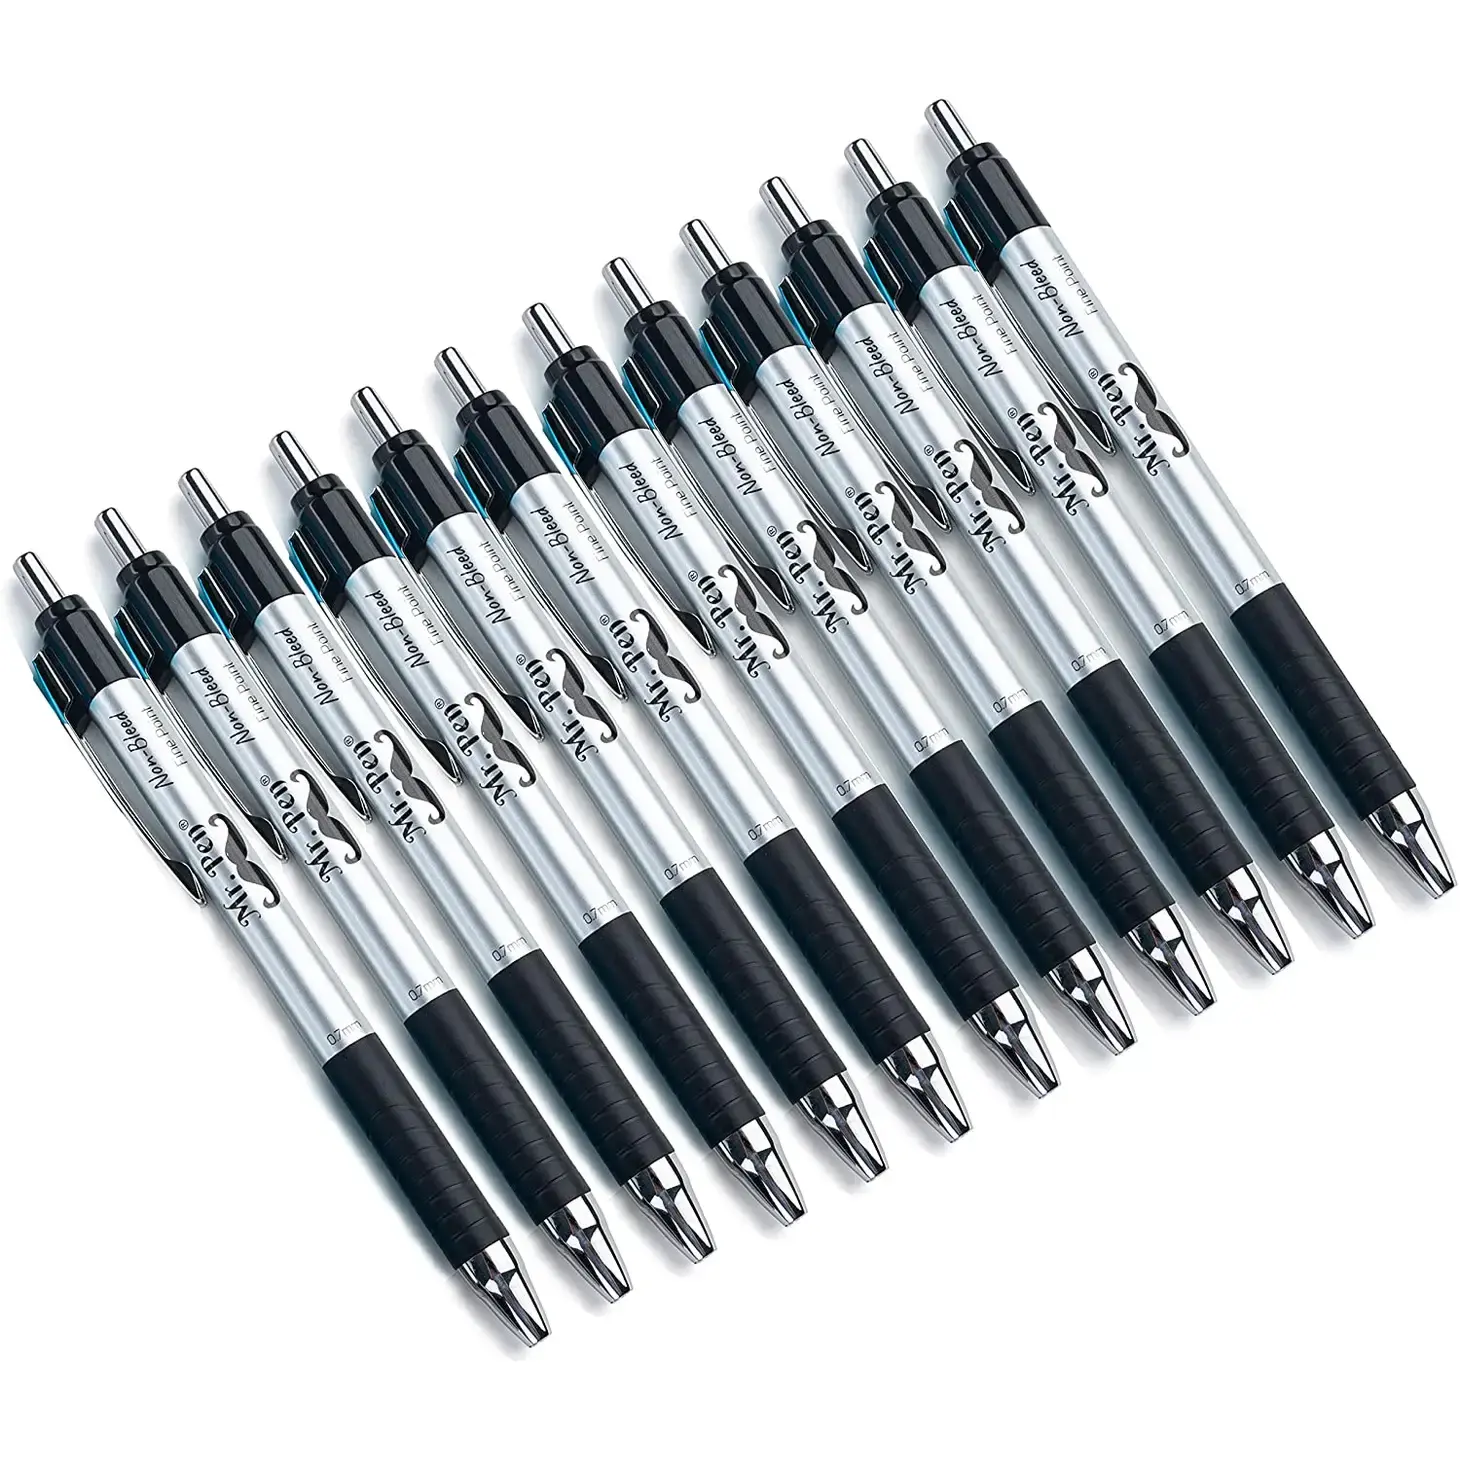 https://cdn.shoplightspeed.com/shops/605935/files/57457067/mr-pen-black-pens-12-pack-fast-dry.jpg